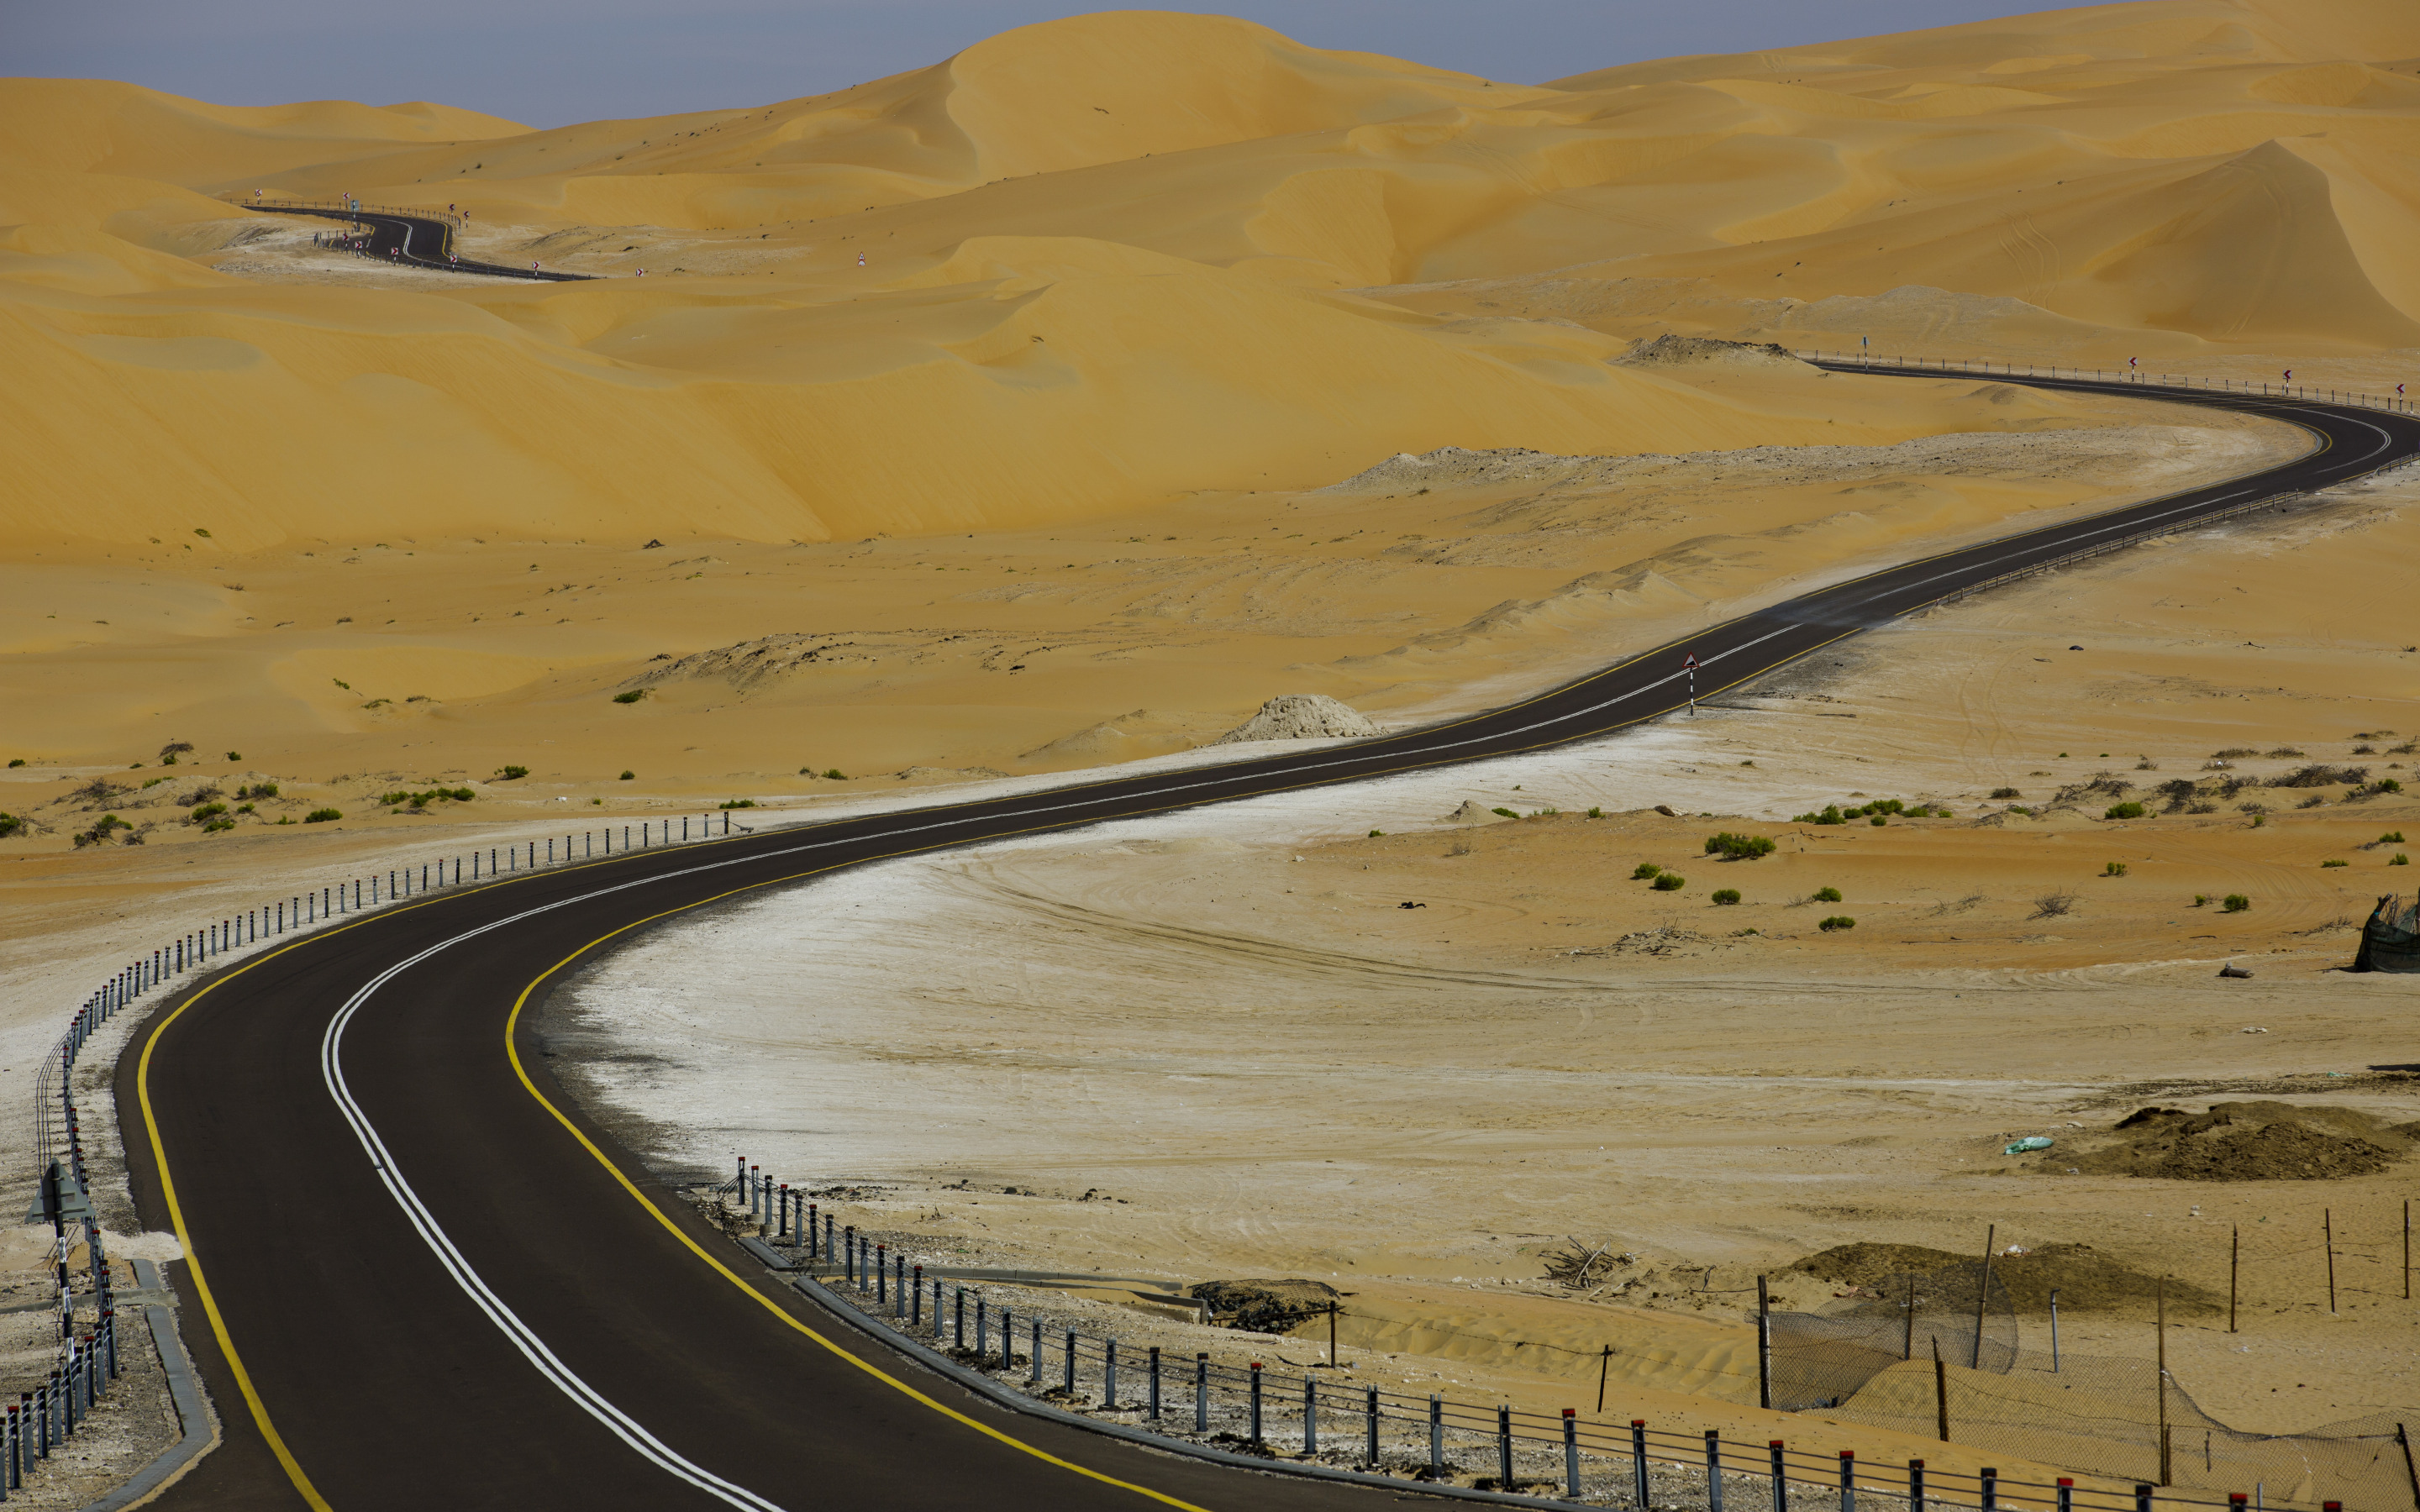 Дубай трасса. Дорога Абу Даби в пустыне. Египет Абу Даби. Дорога Дубай Абу Даби. Дорога в пустыне Дубай.